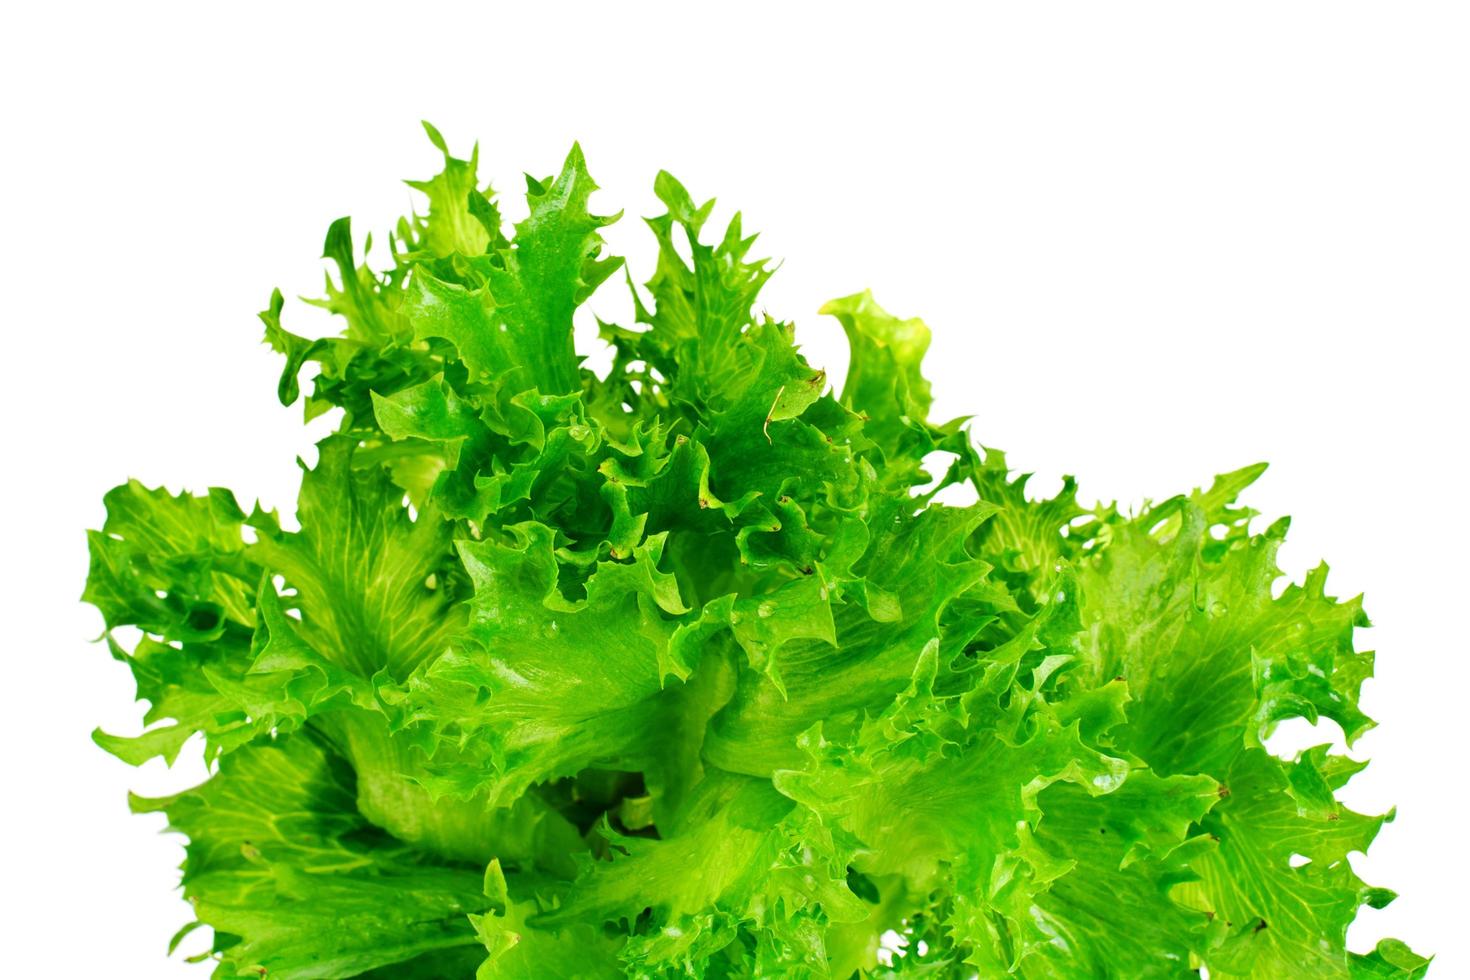 grüner frischer Salat foto